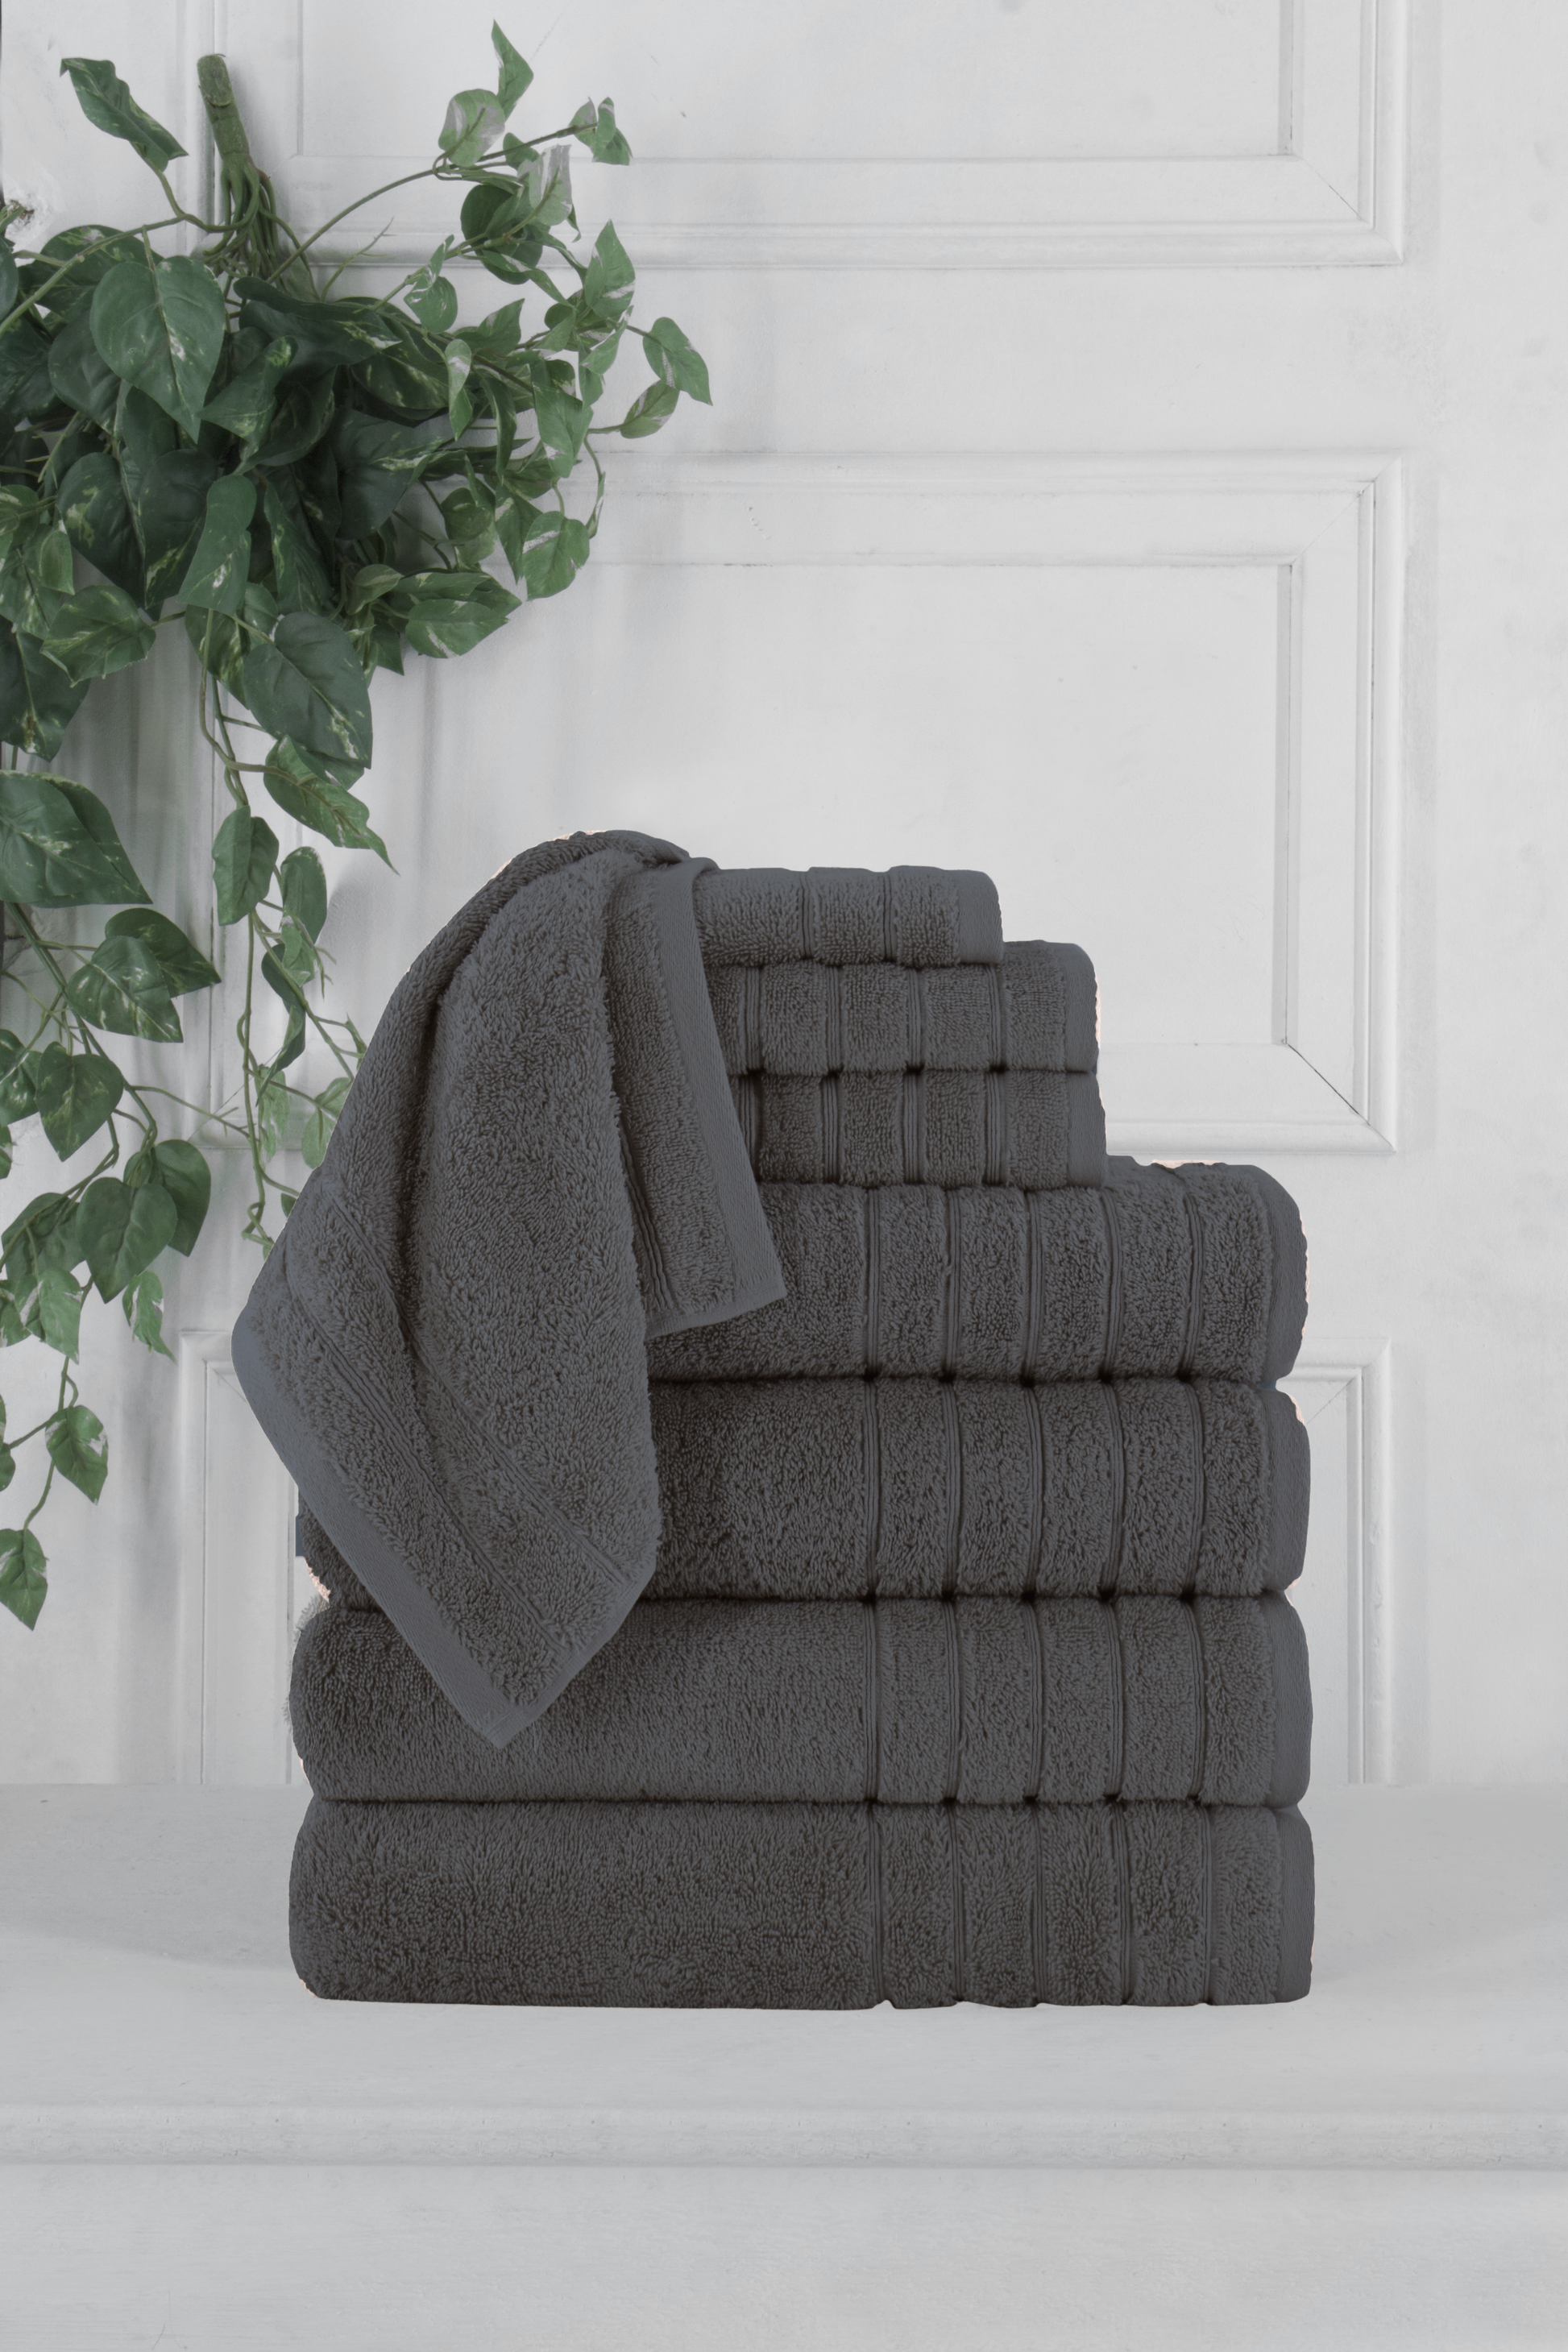 MANOR RIDGE Turkish Cotton 700 GSM 8 Piece Towel Set, Super Soft